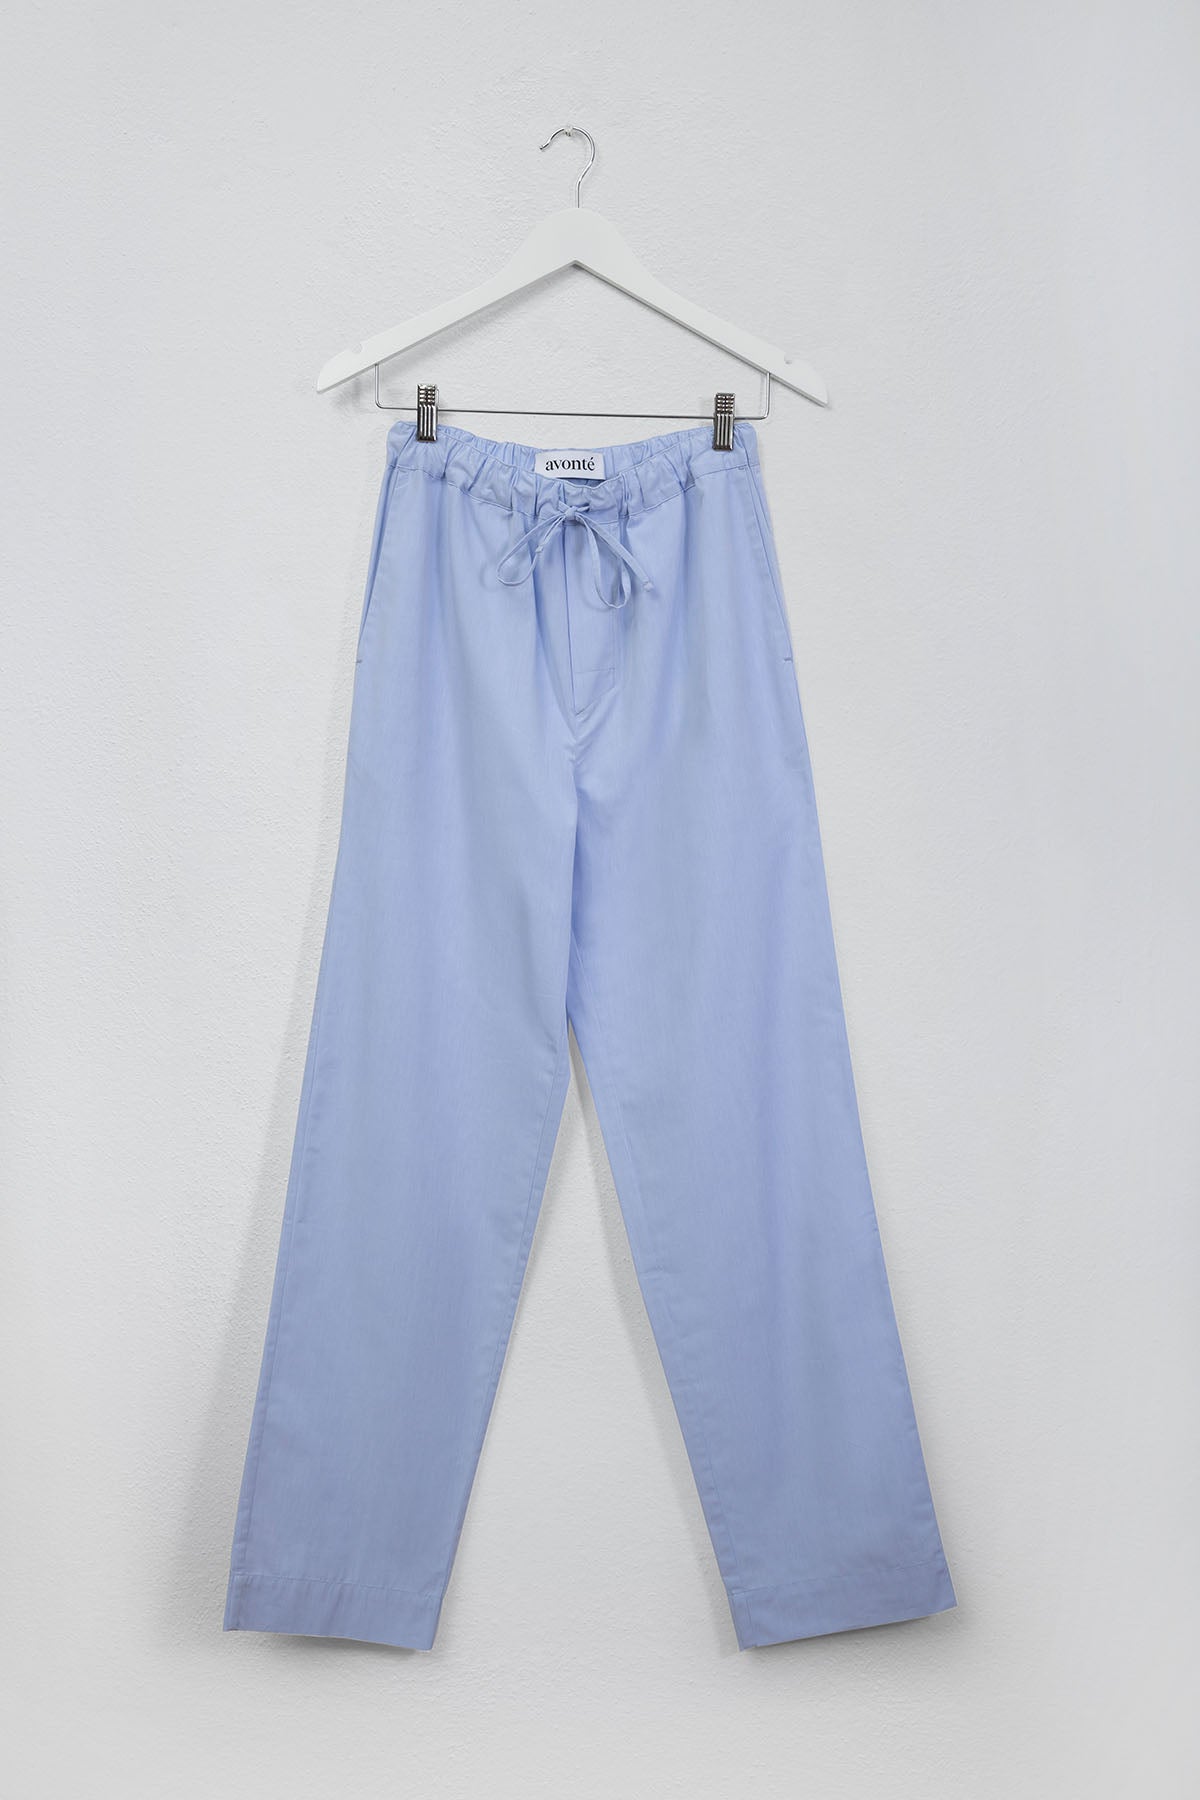 pyjama pants in color breeze blue_avonte